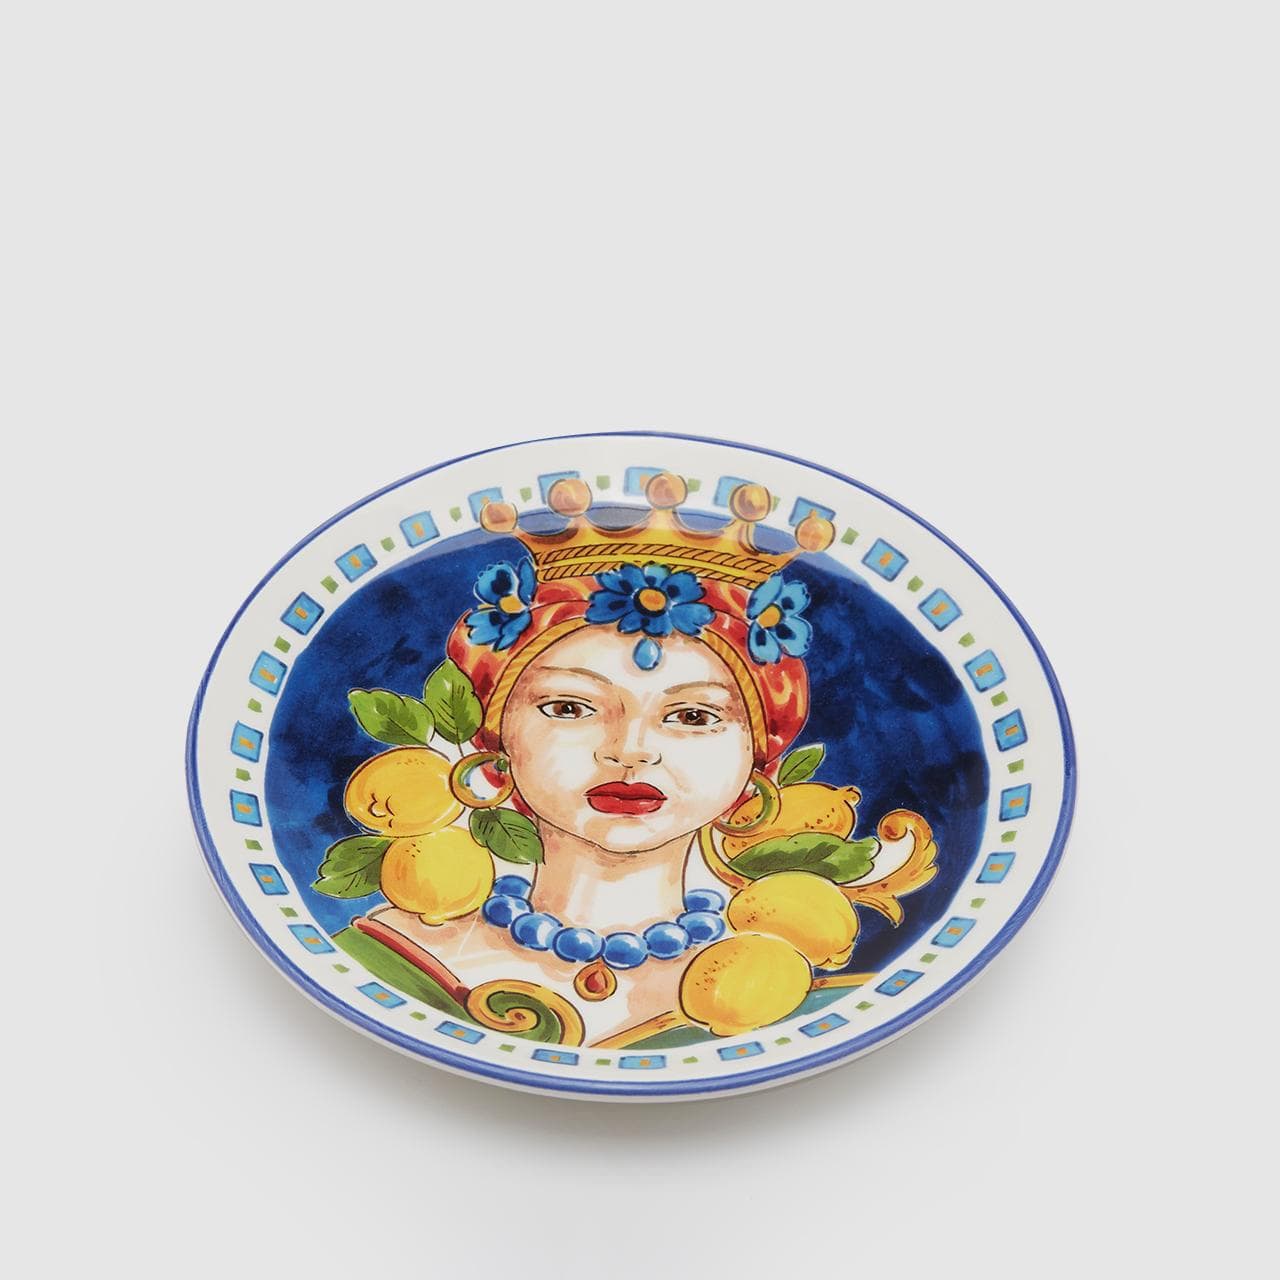 Italiving Teller Speiseteller mit buntem Motiv aus Sizilien - Keramik Tiefe 2 cm Ø 21,5 cm